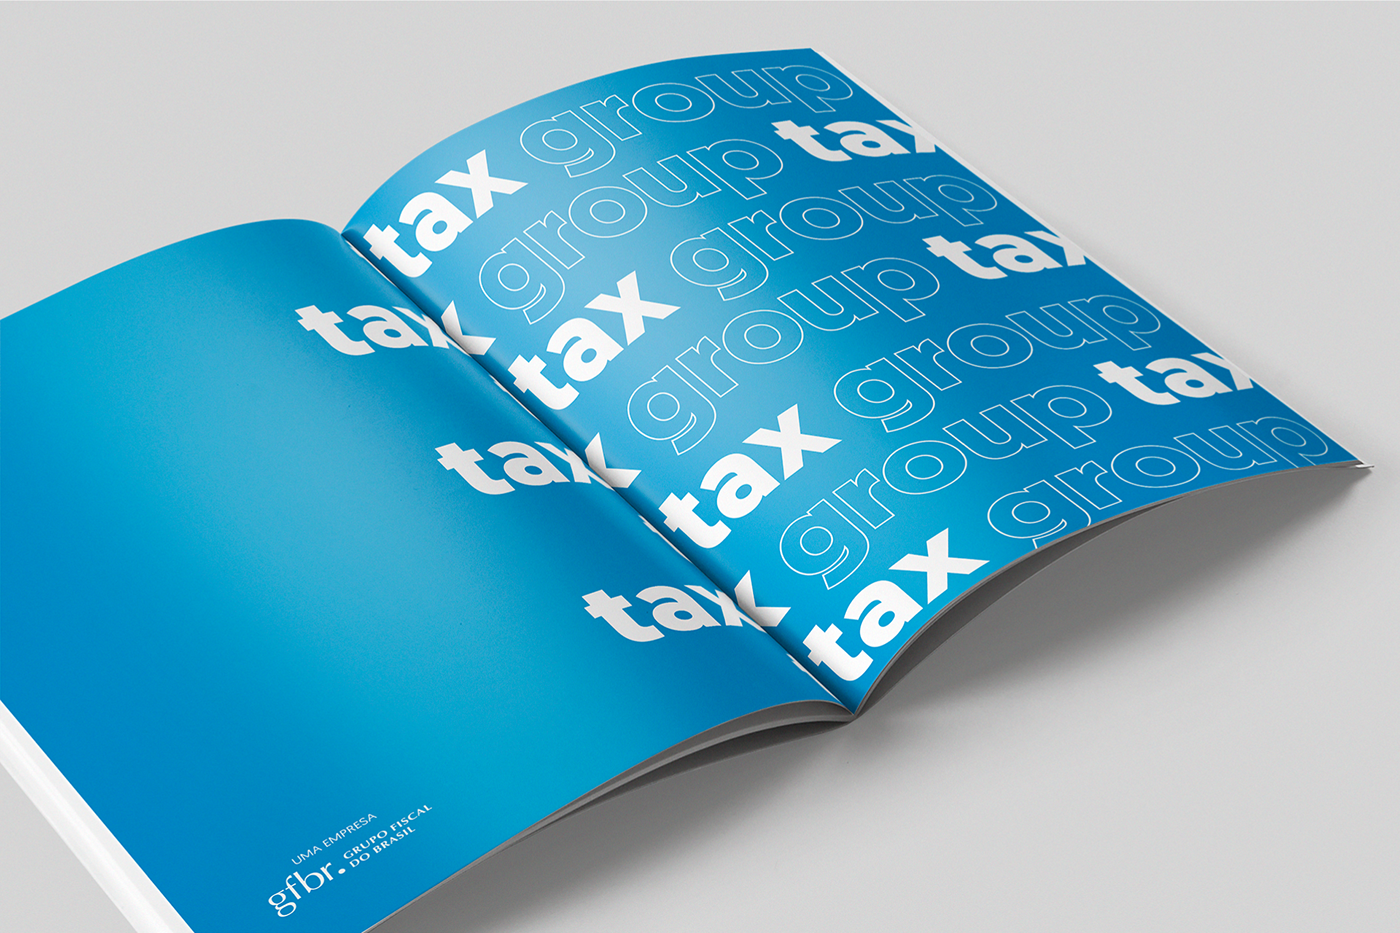 tax Bank financial banco financeiro credit branding  editorial design  art direction 